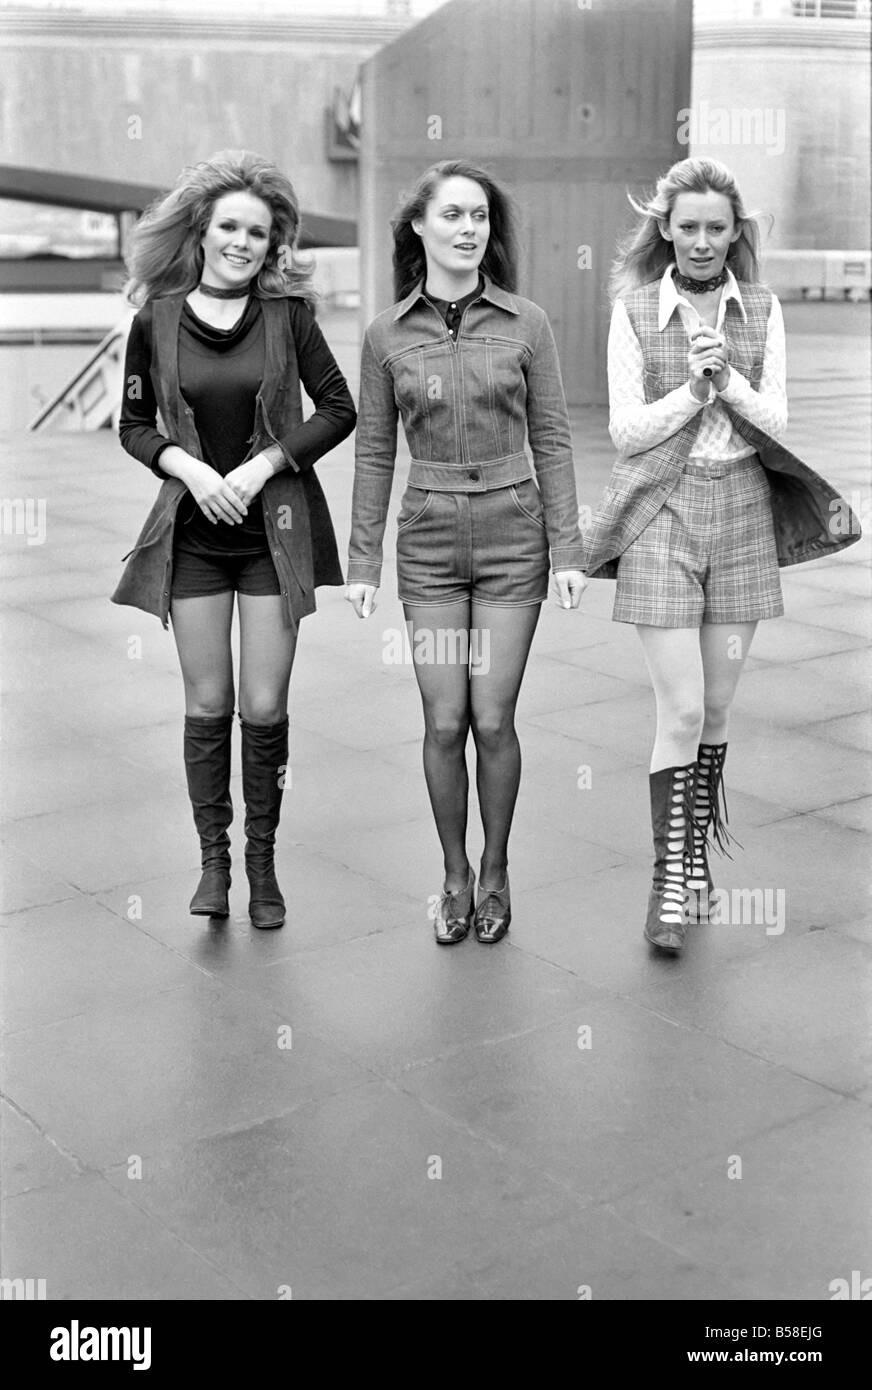 70er Jahre Mode: Shorts. Januar 1971 71-00161-015 Stockfotografie - Alamy